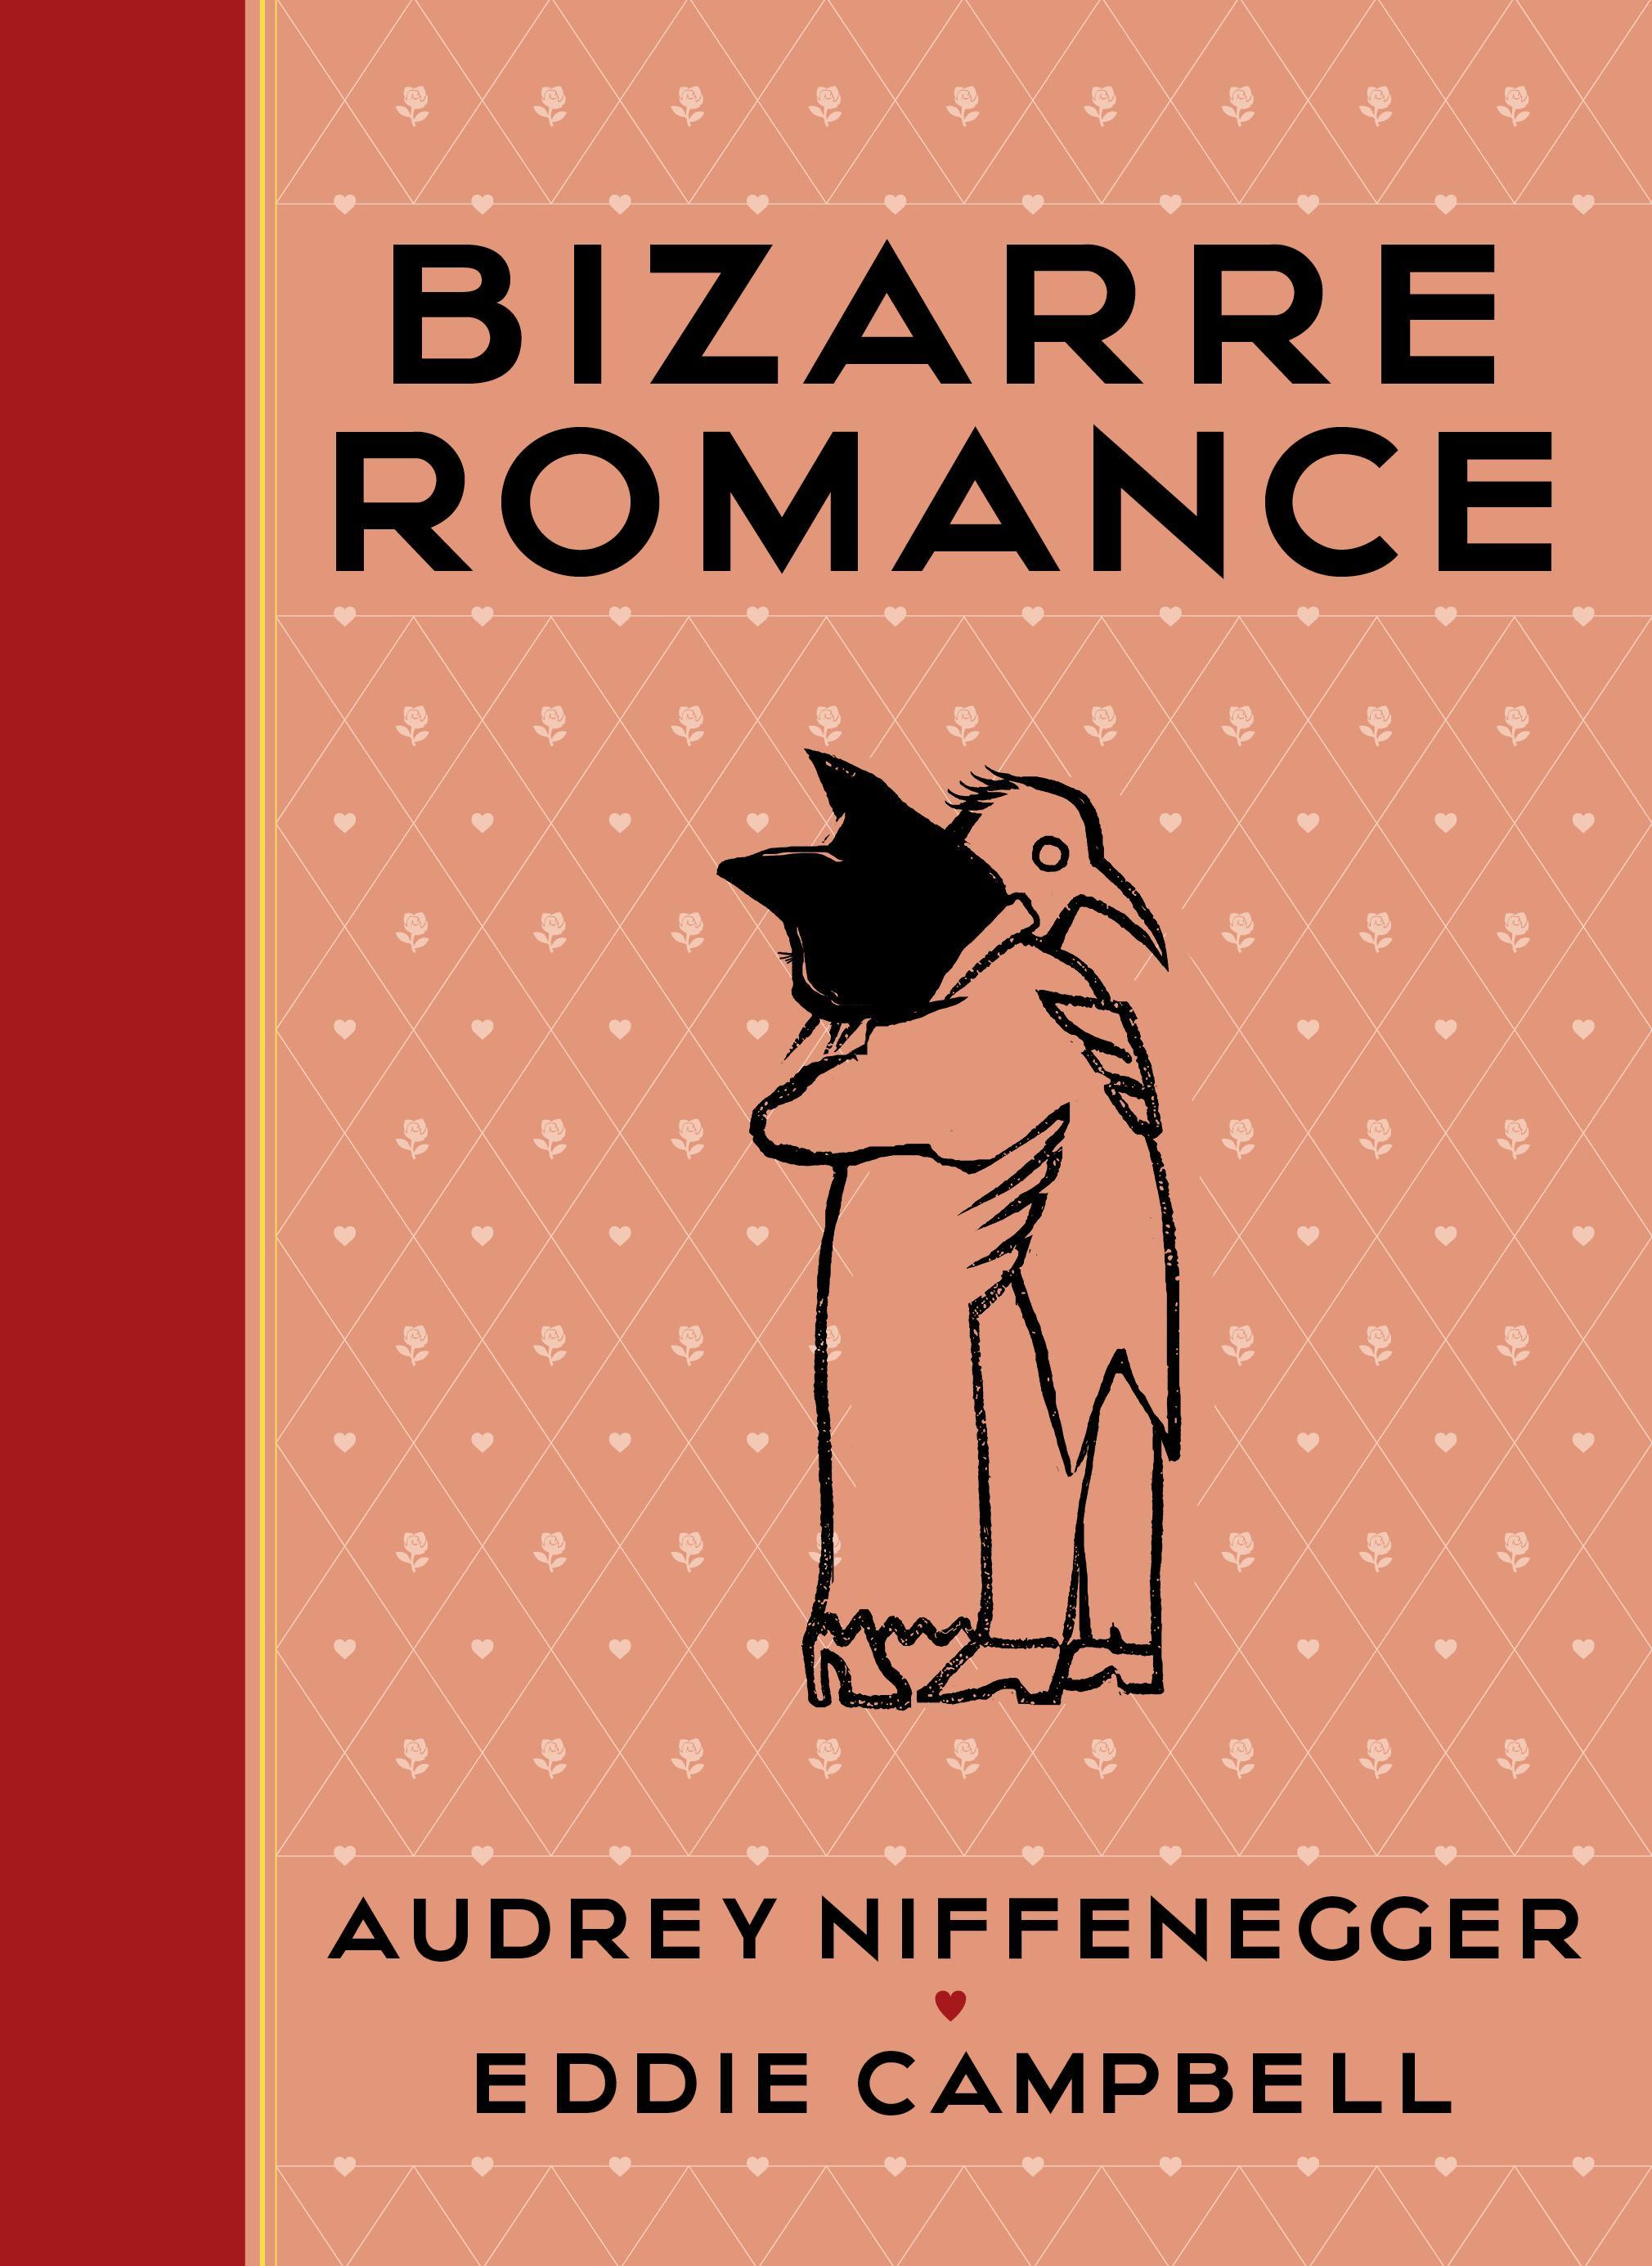 Bizarre Romance - Audrey Niffenegger